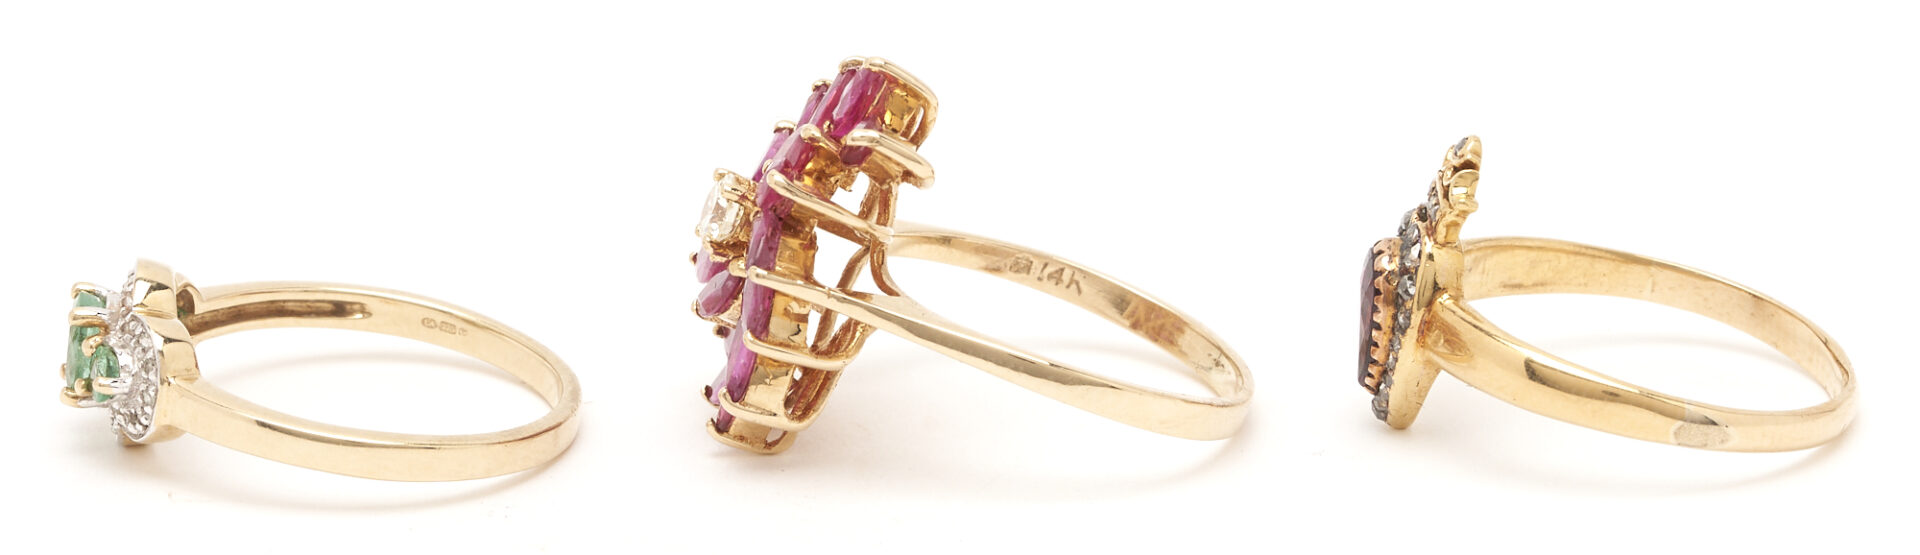 Lot 1056: 3 Ladies Gold & Gemstone Fashion Rings